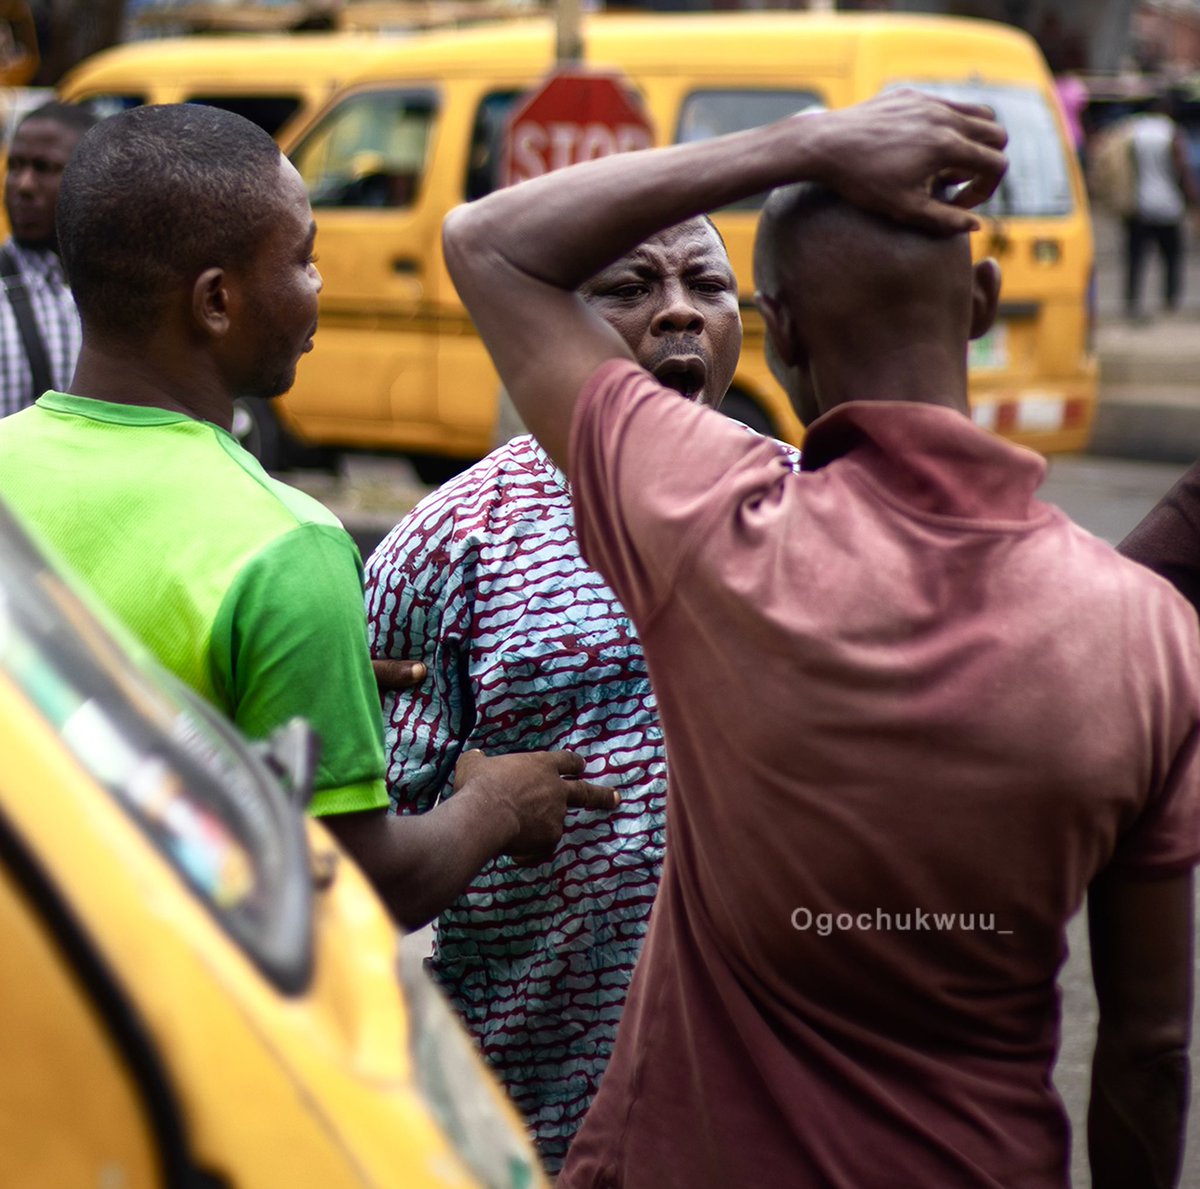 Farabaale •

#streetstorytelling  #Nigeria  #ogochukwuu_  #candidstreetphotography #surulere  #documentary #photography #lagos #streetphotographer #canonphotography #lagosphotographer #candid #twitter